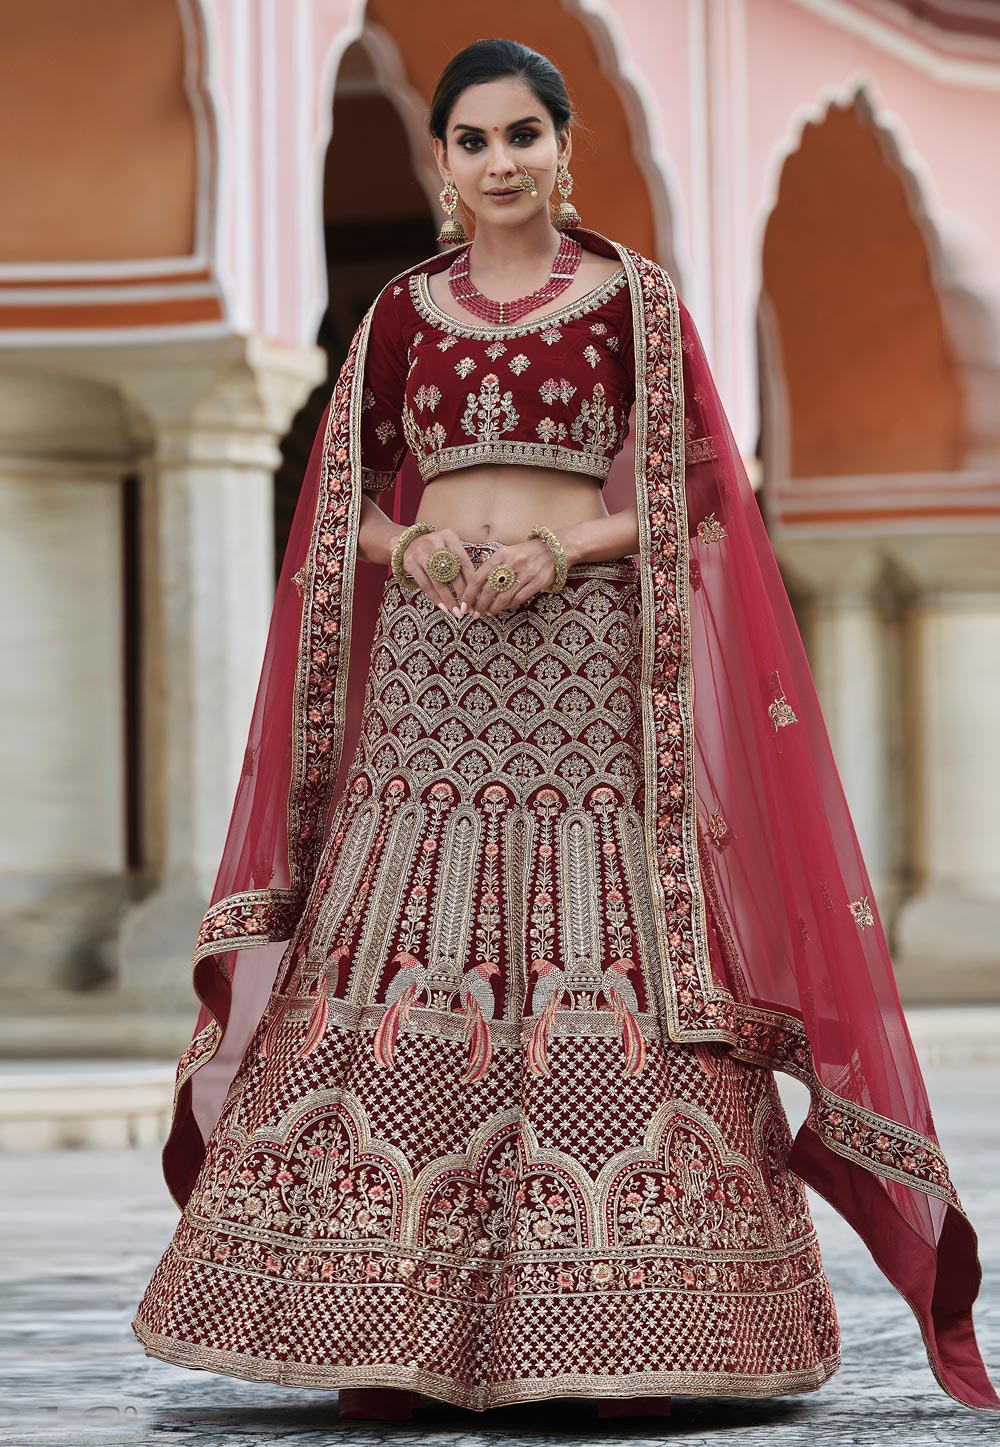 Learn All About The Gorgeous Bride Patralekhaa's Dream Wedding Looks |  HerZindagi